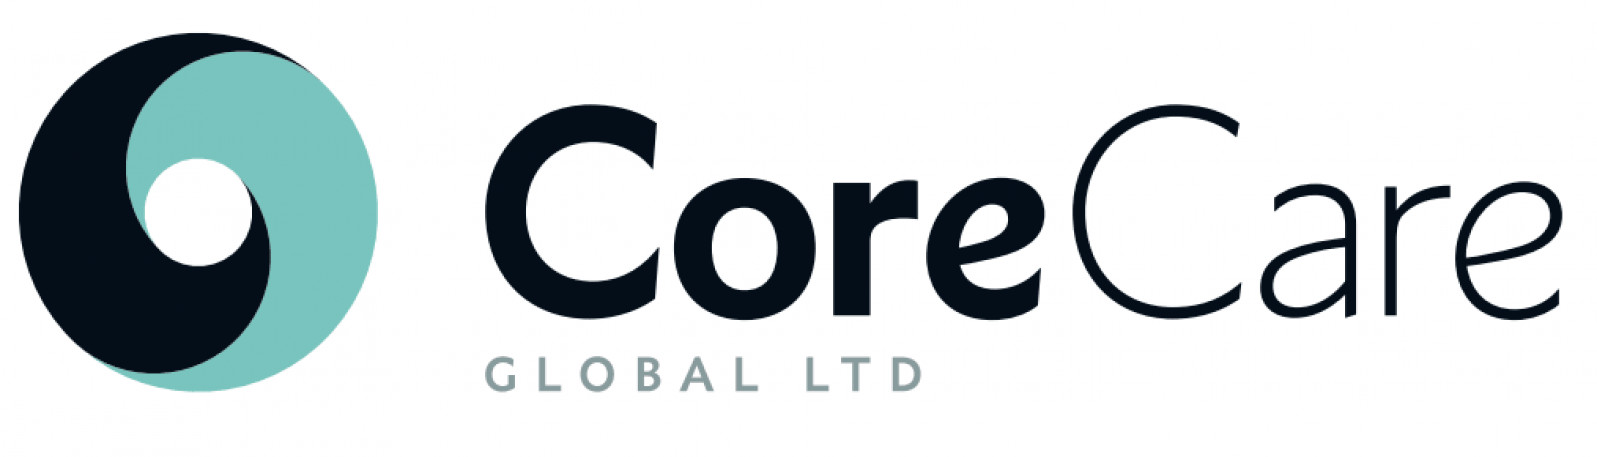 Why high growth healthcare company Corecare Global...